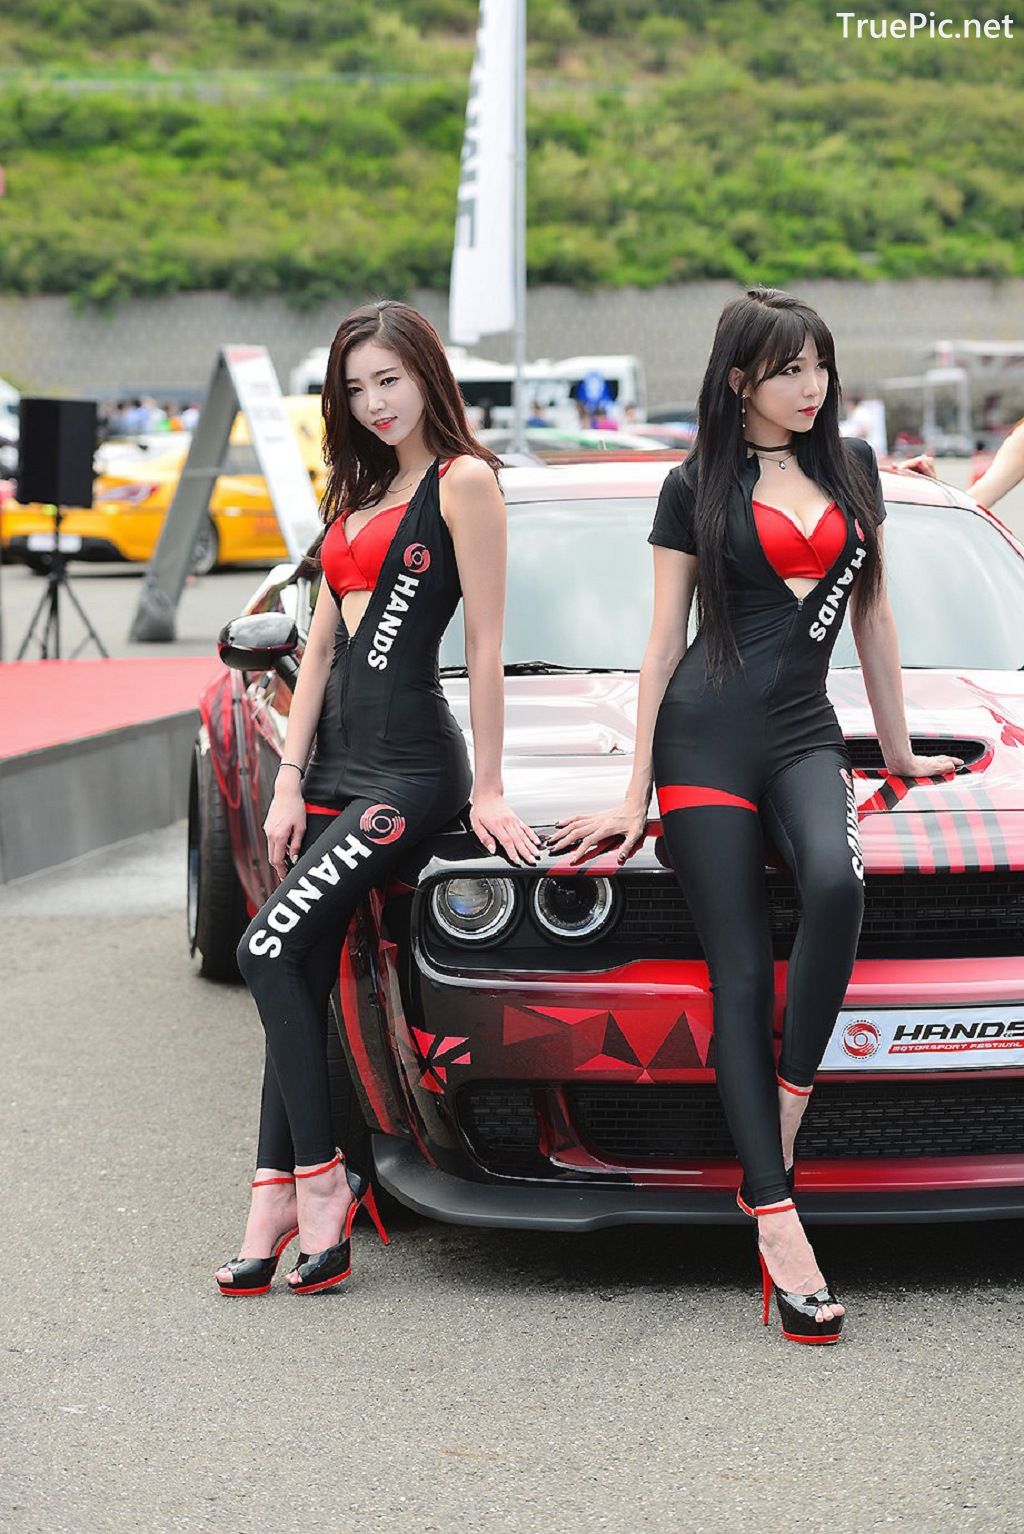 Image-Korean-Racing-Model-Lee-Eun-Hye-At-Incheon-Korea-Tuning-Festival-TruePic.net- Picture-40